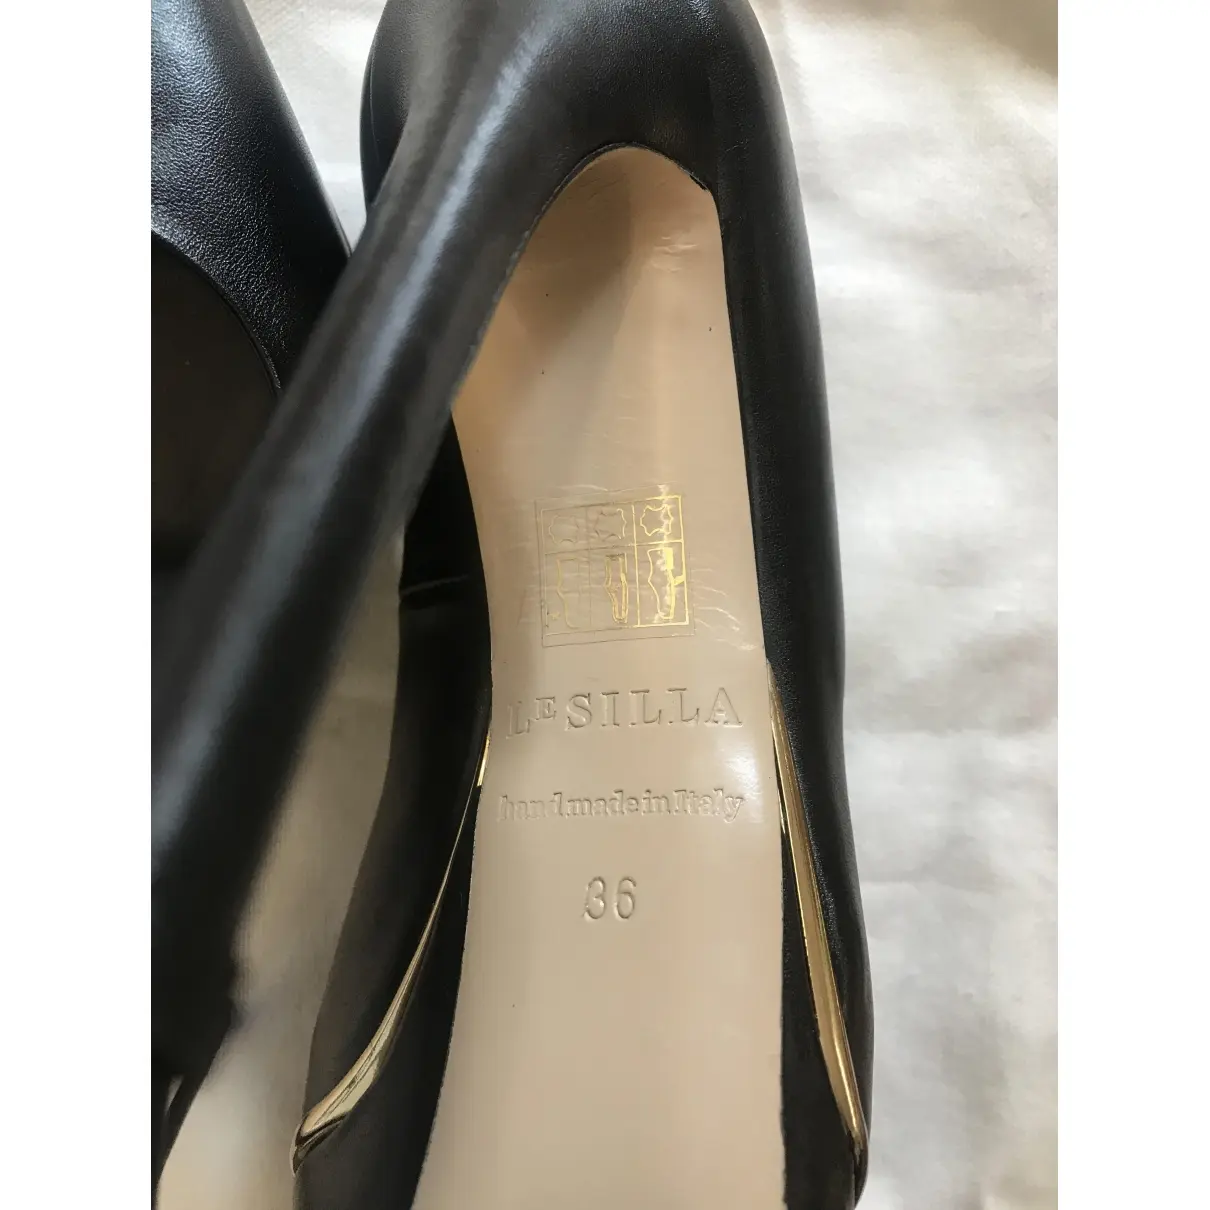 Buy Le Silla Leather heels online